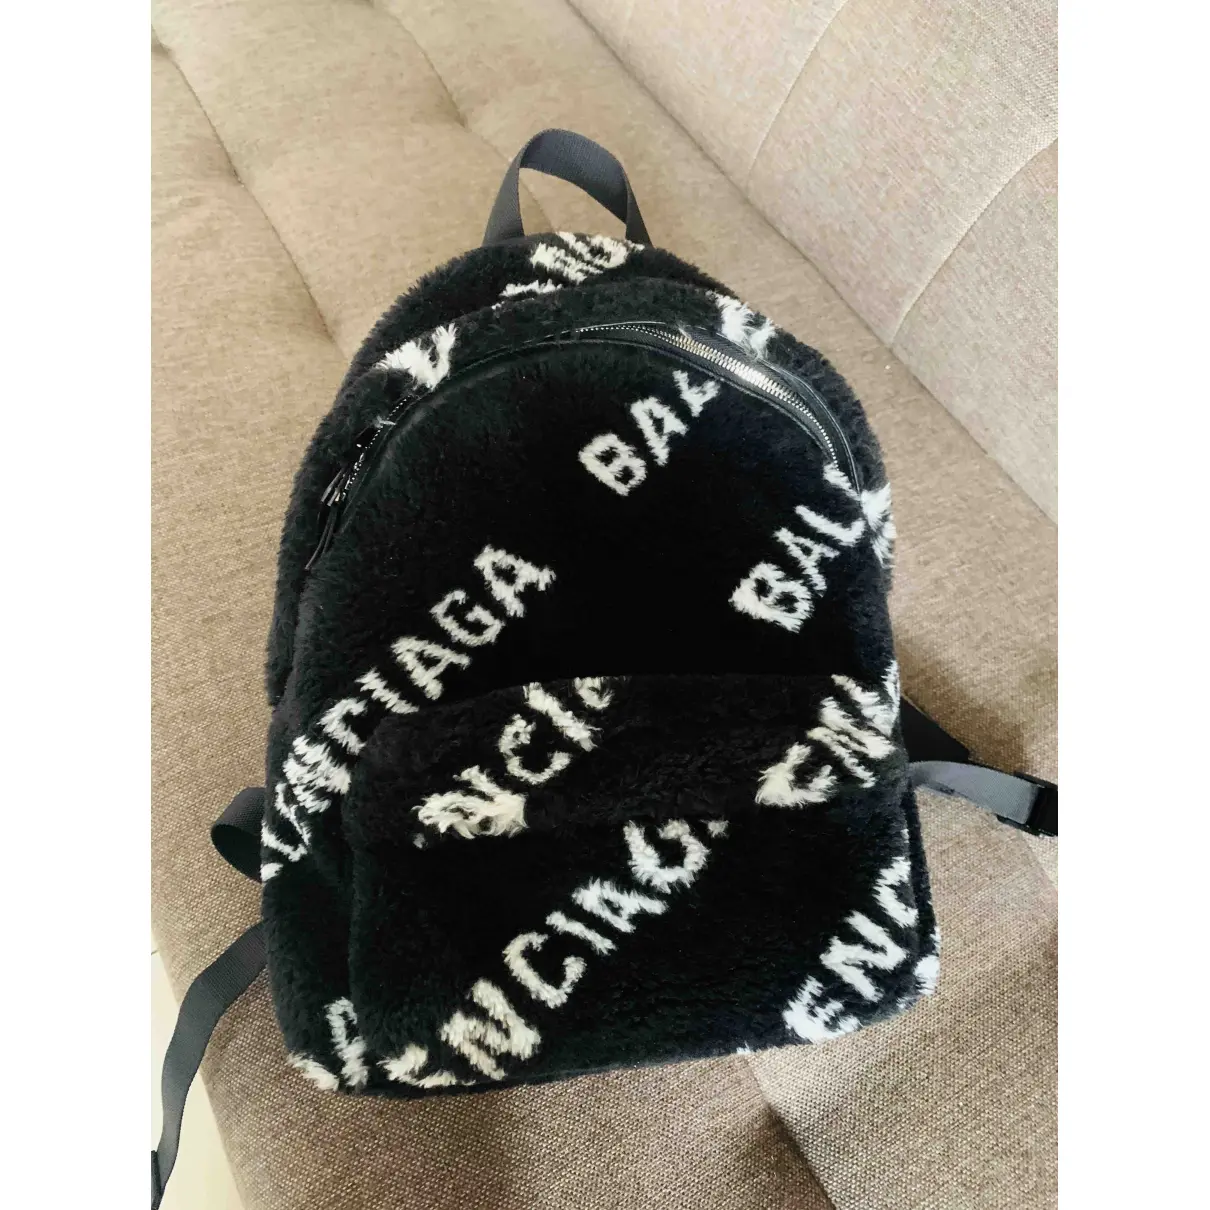 Backpack Balenciaga